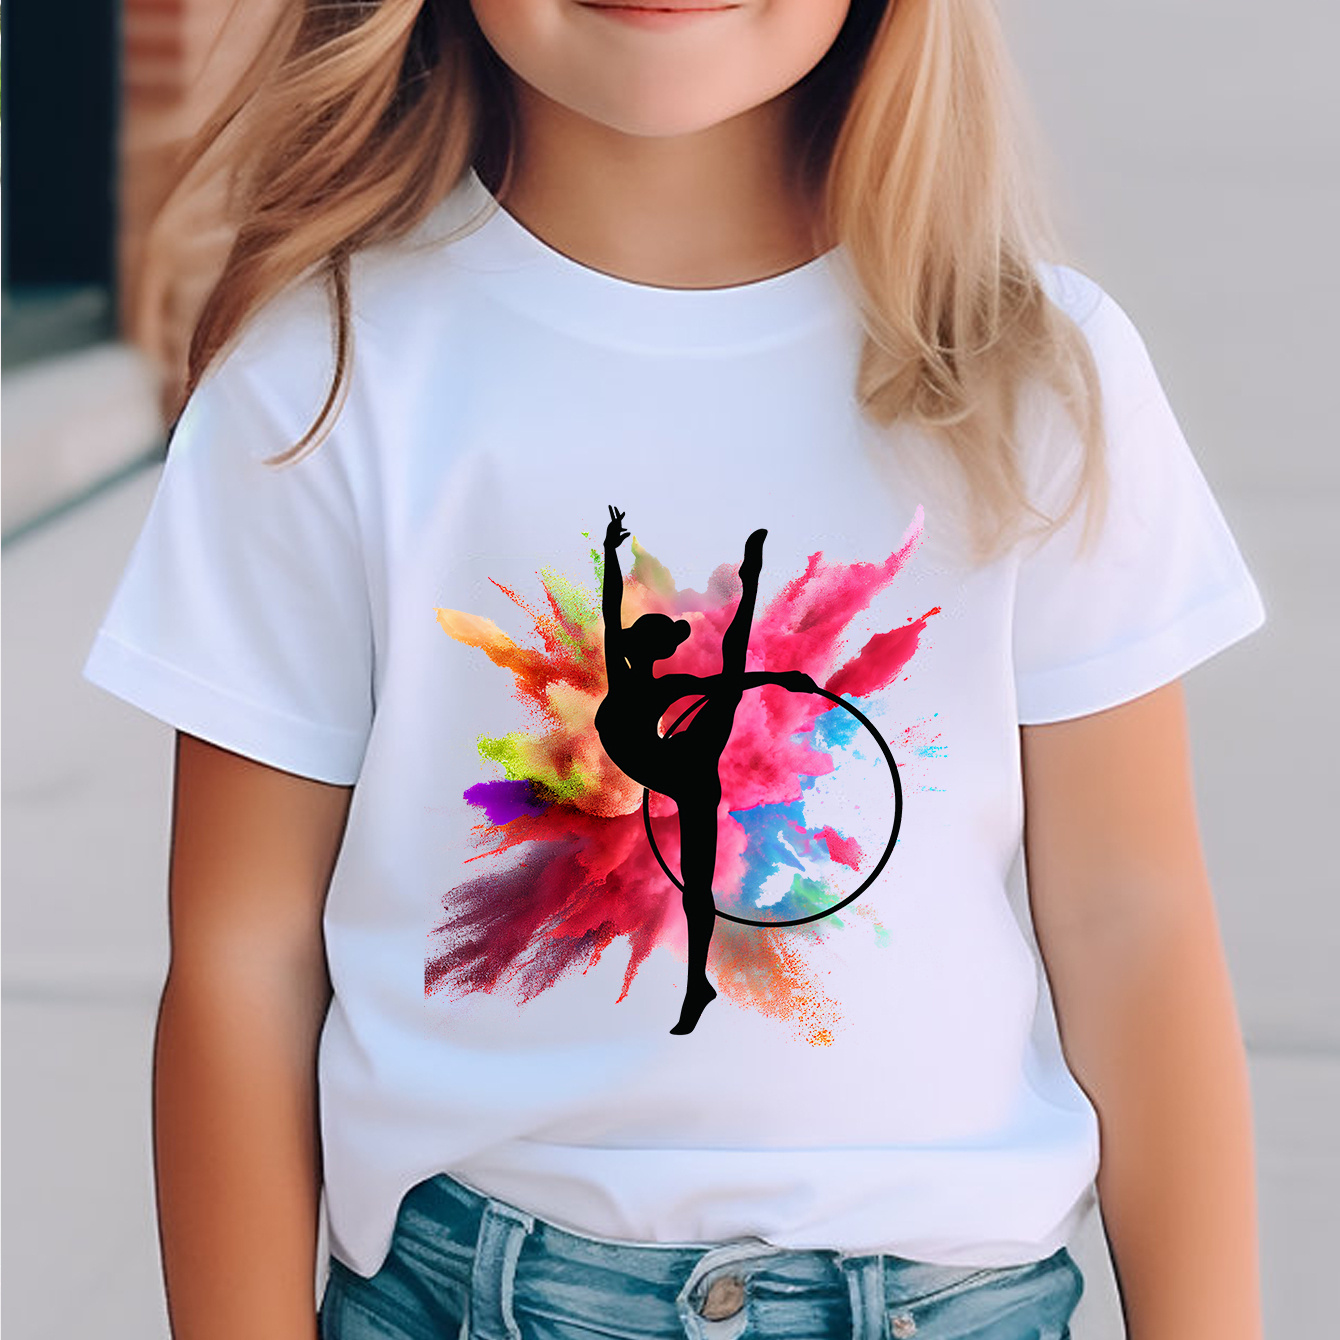 

Girl's Cartoon Dancer Pattern Shirt, Casual Breathable Comfy Short Sleeve Crew Neck Tee Top For City Walk Street Hanging Outdoor Activities